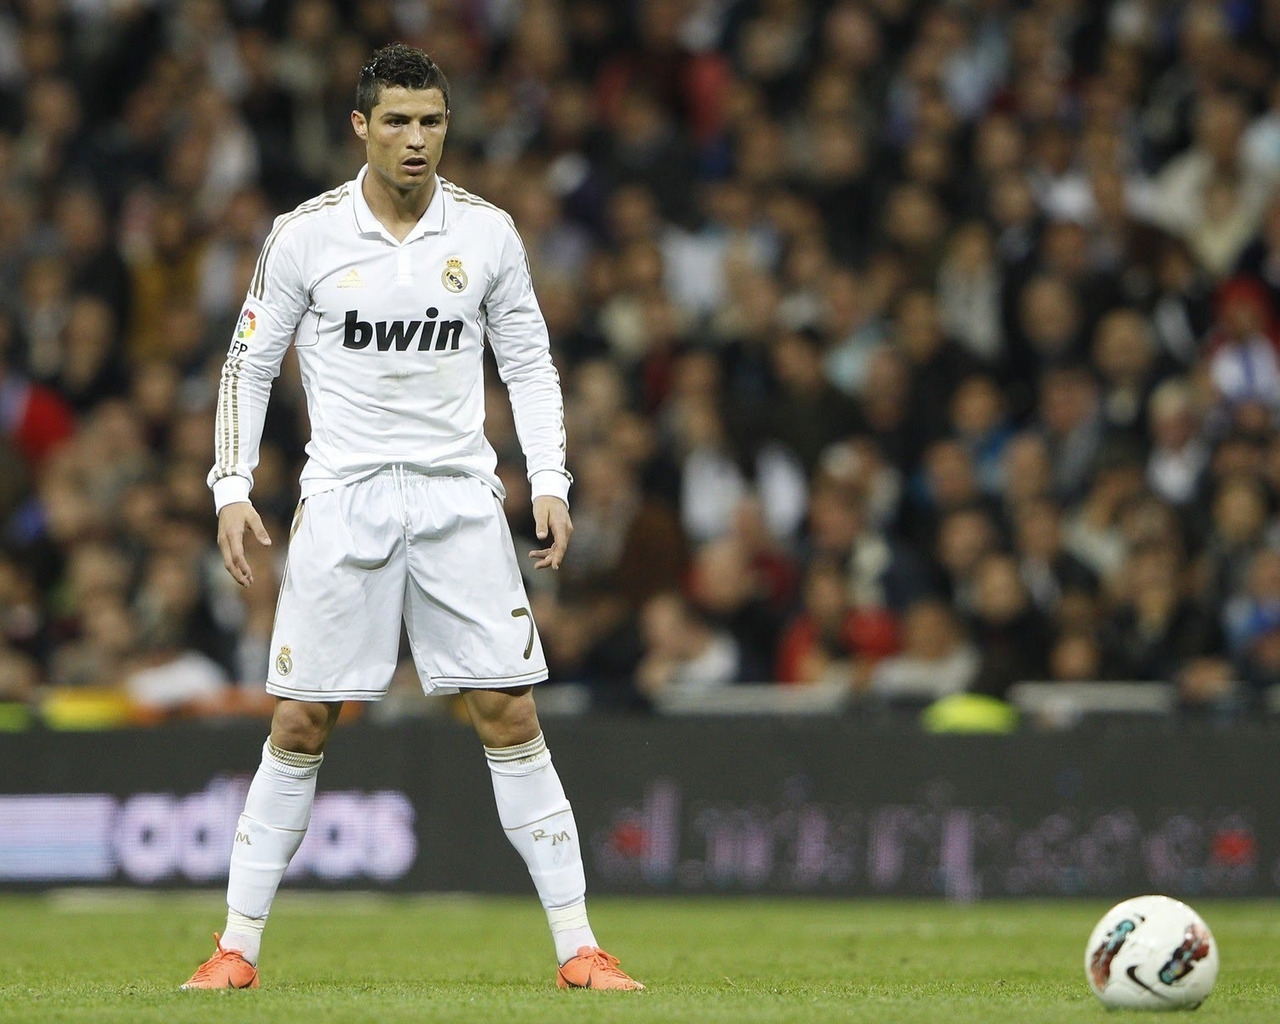 Cristiano Ronaldo Concentrating for 1280 x 1024 resolution